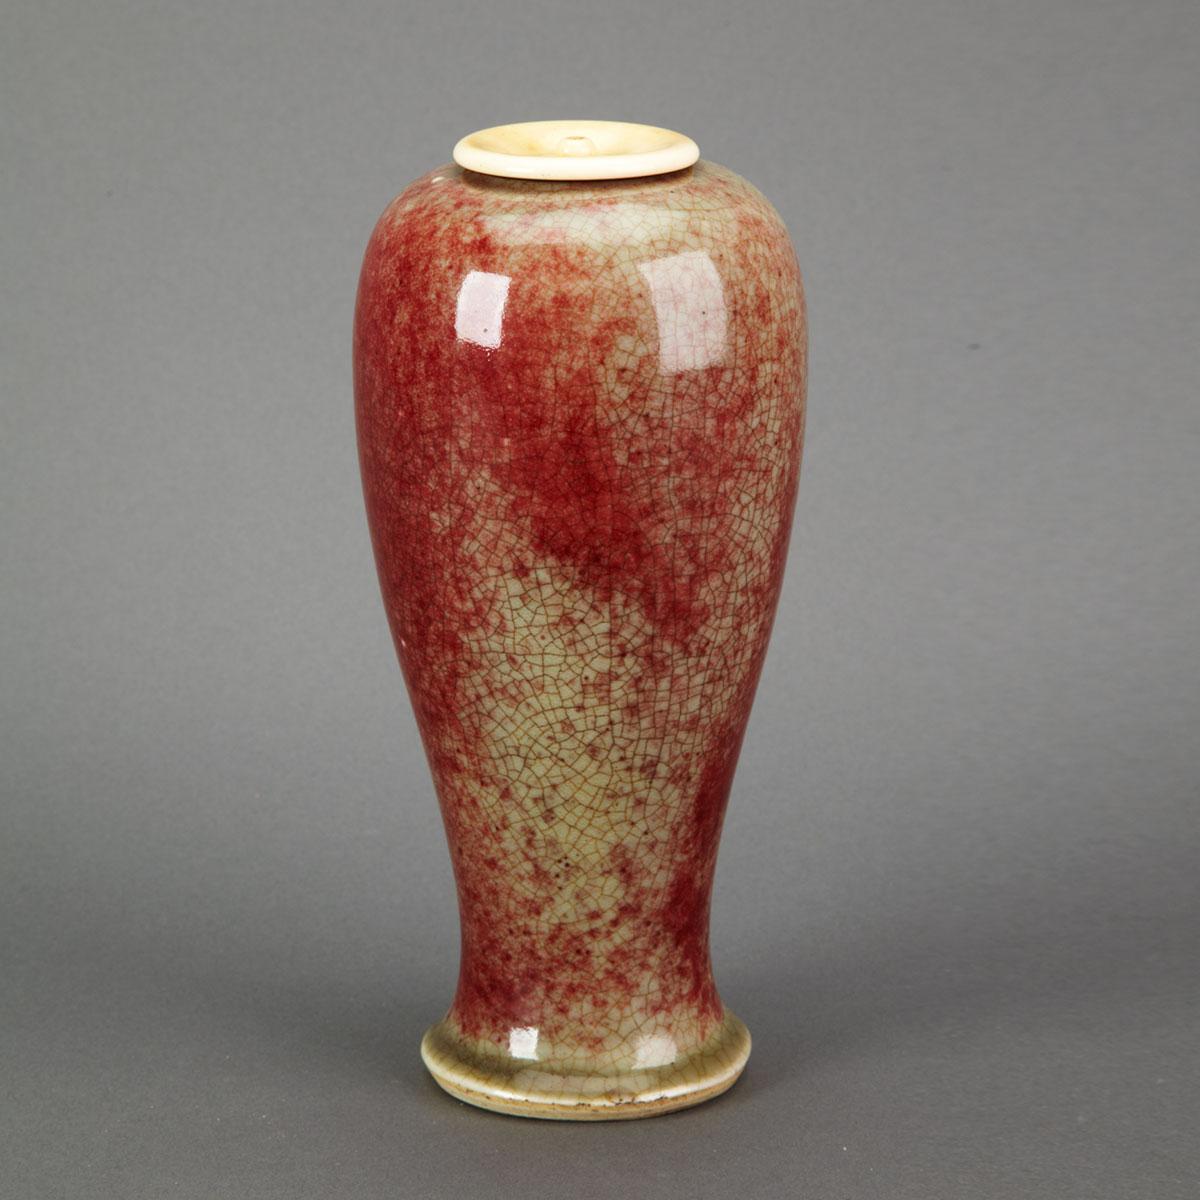 Peach Bloom Glazed Vase, 19th Century or Earlier